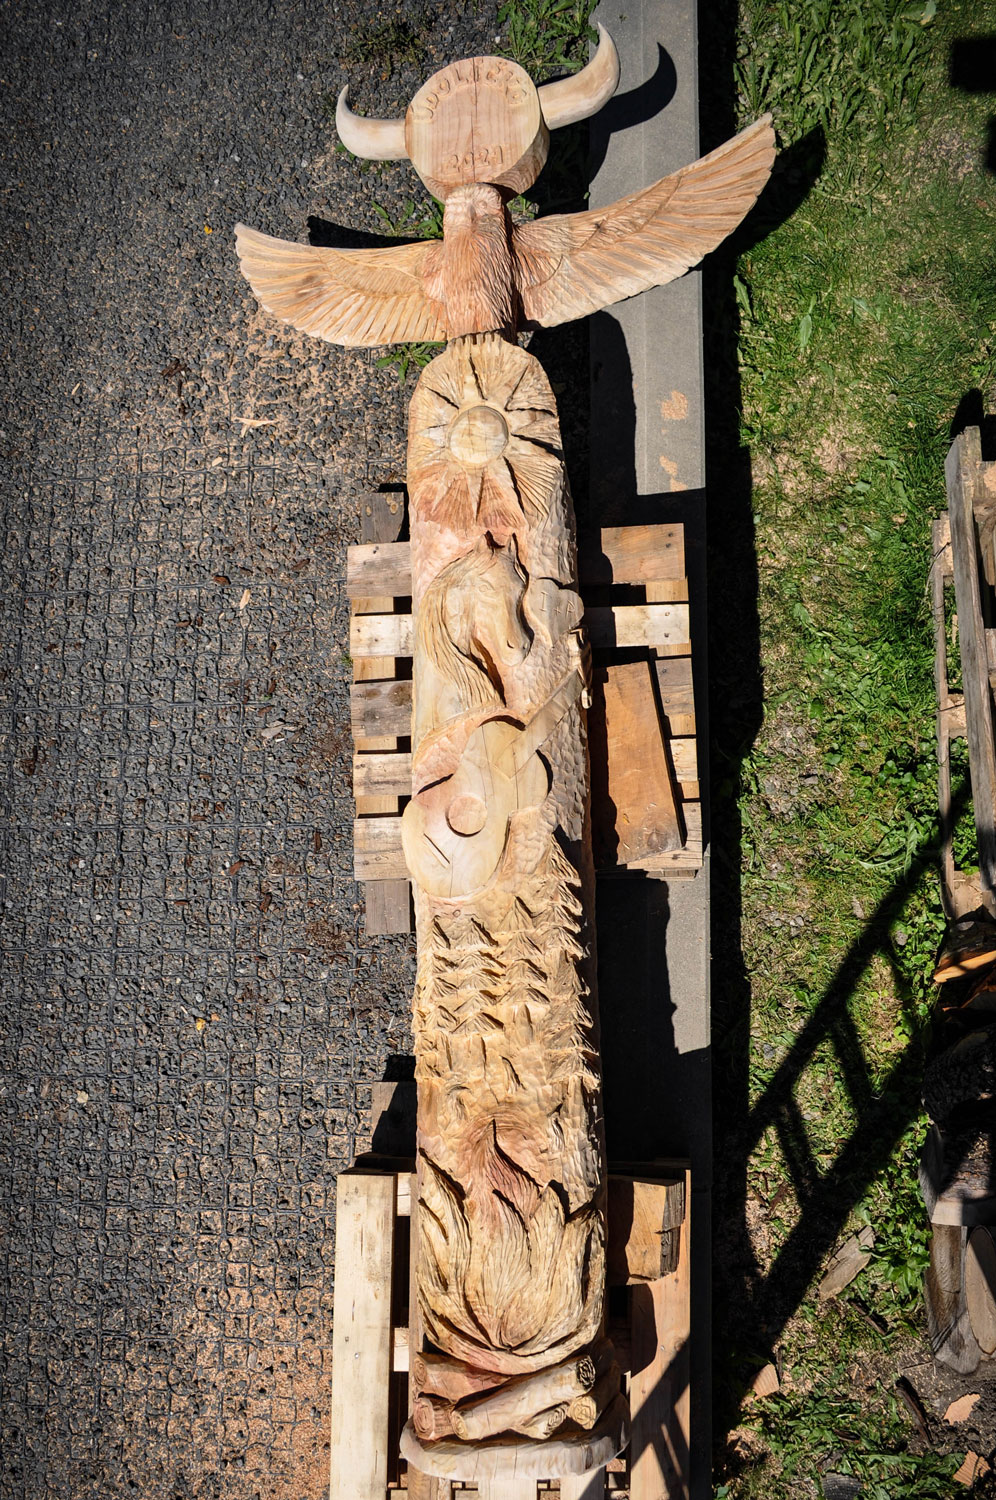 drevorezba-vyrezavani-carving-wood-drevo-socha-totem_3m-radekzdrazil-20210811-01